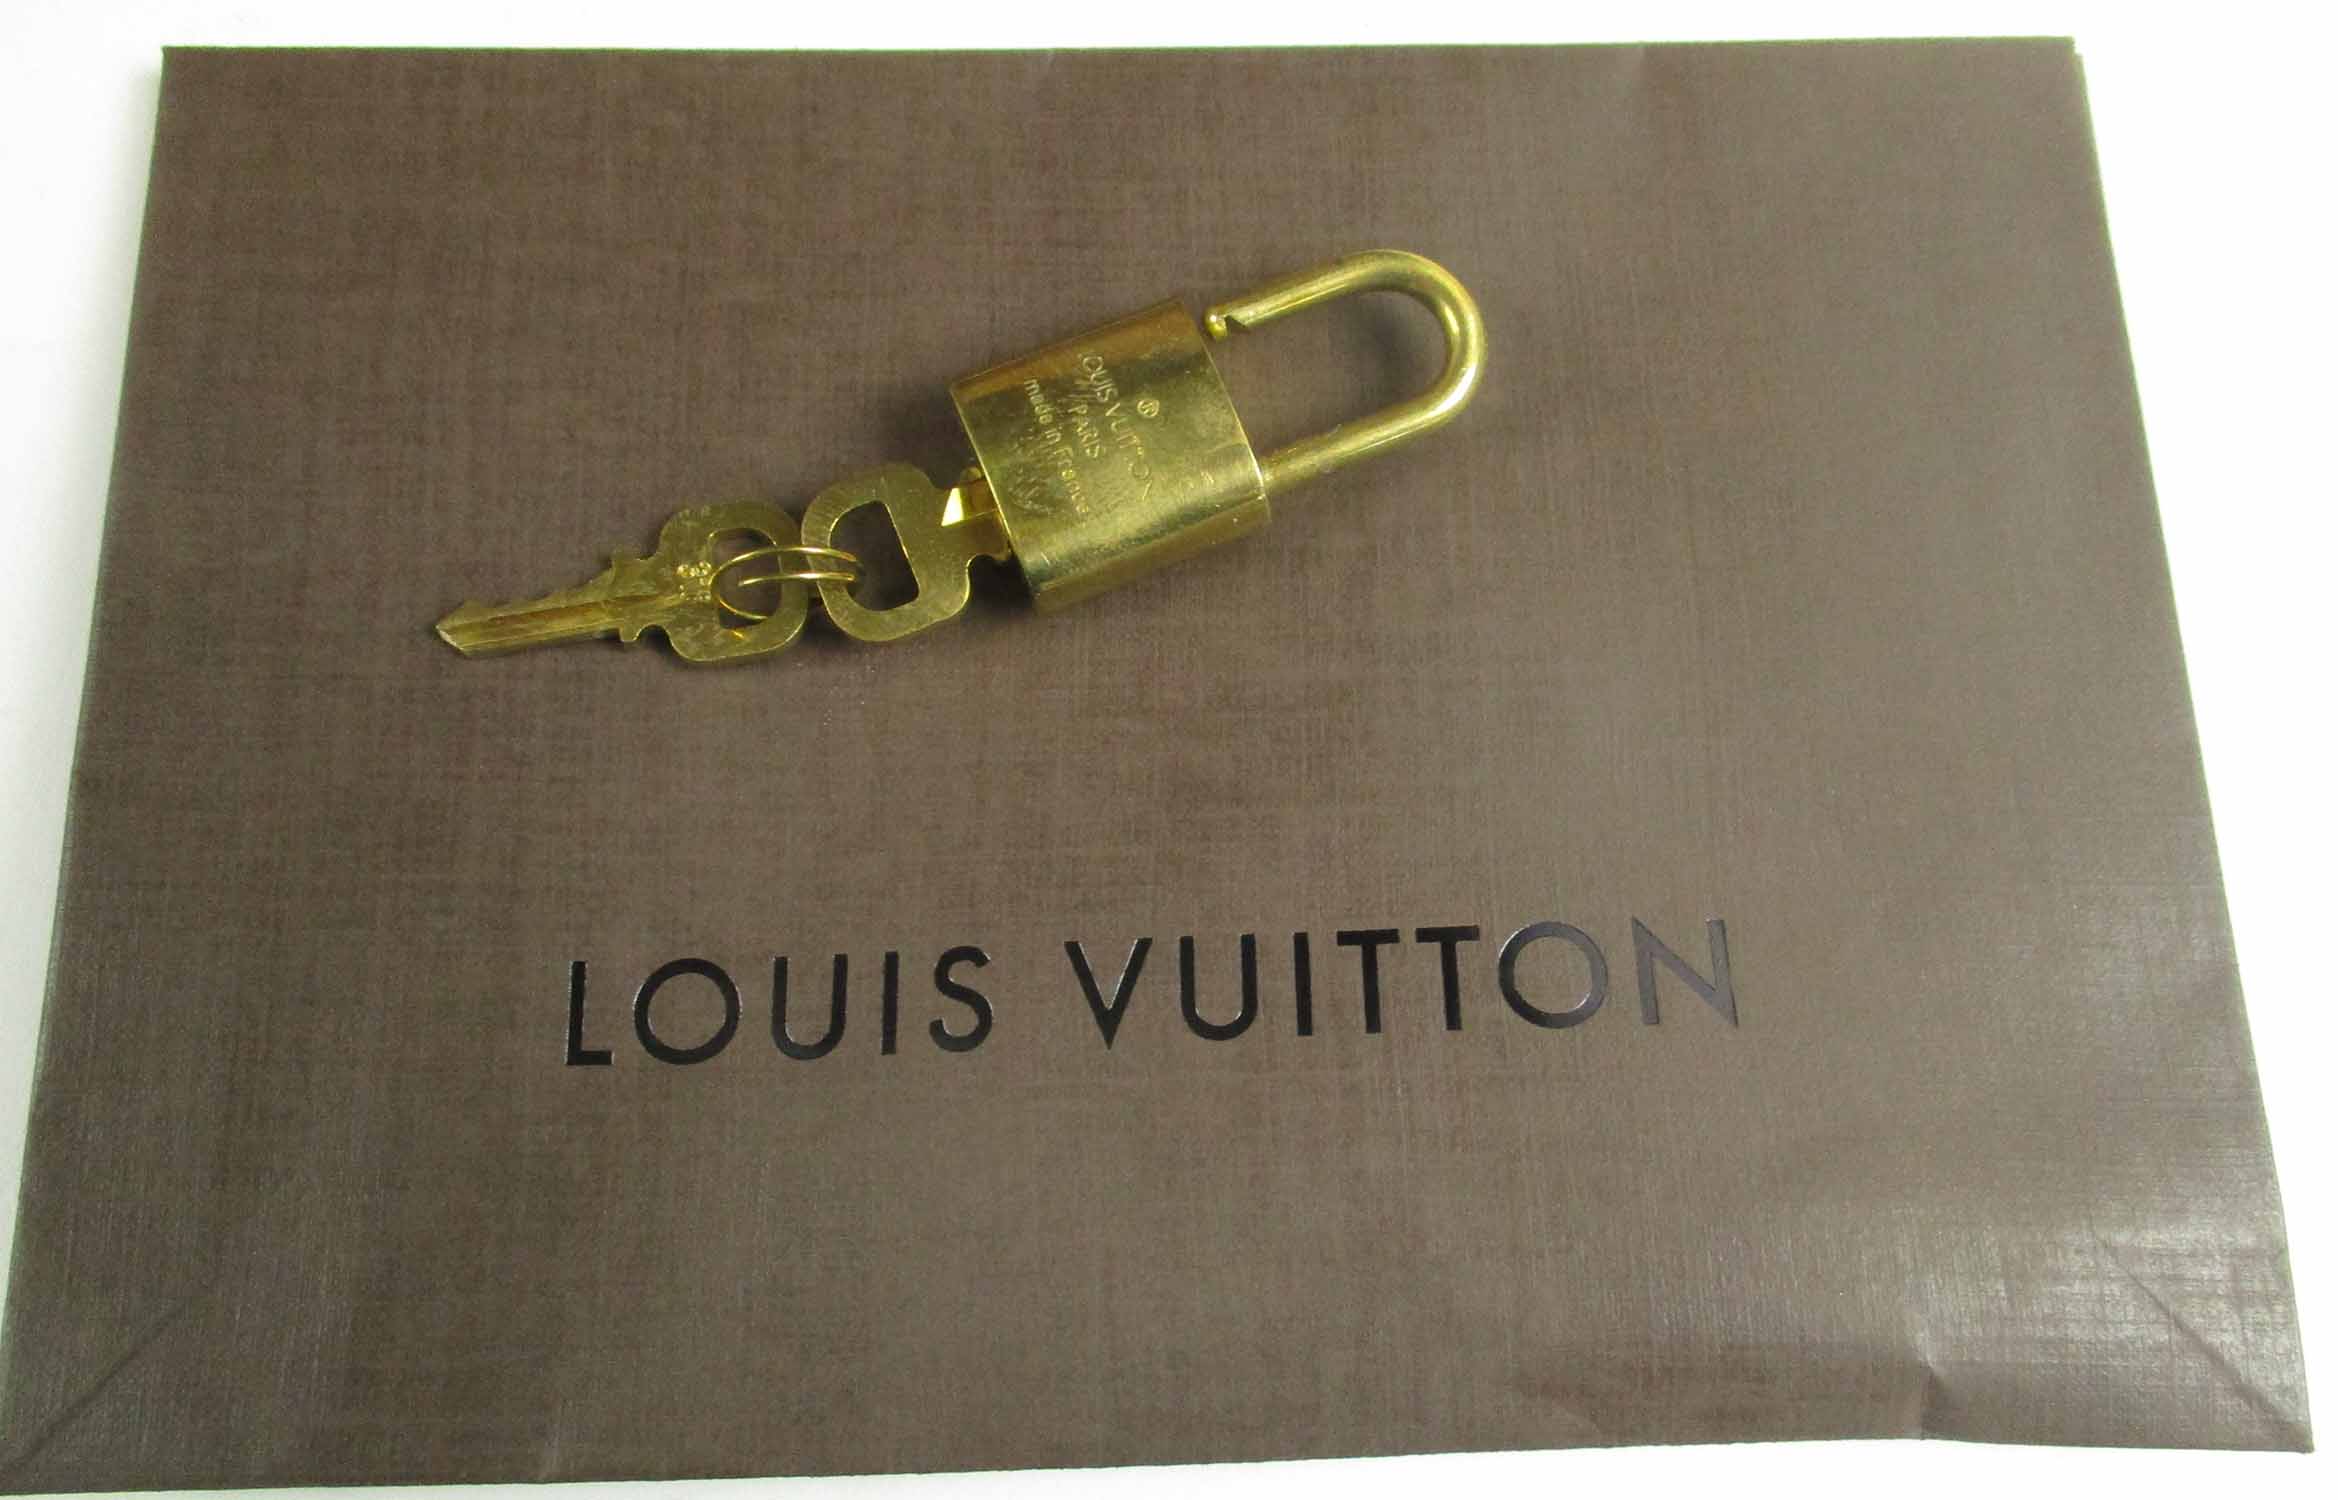 LOUIS VUITTON 'SIRIUS 70' MONOGRAM SUITCASE, plus padlock and keys